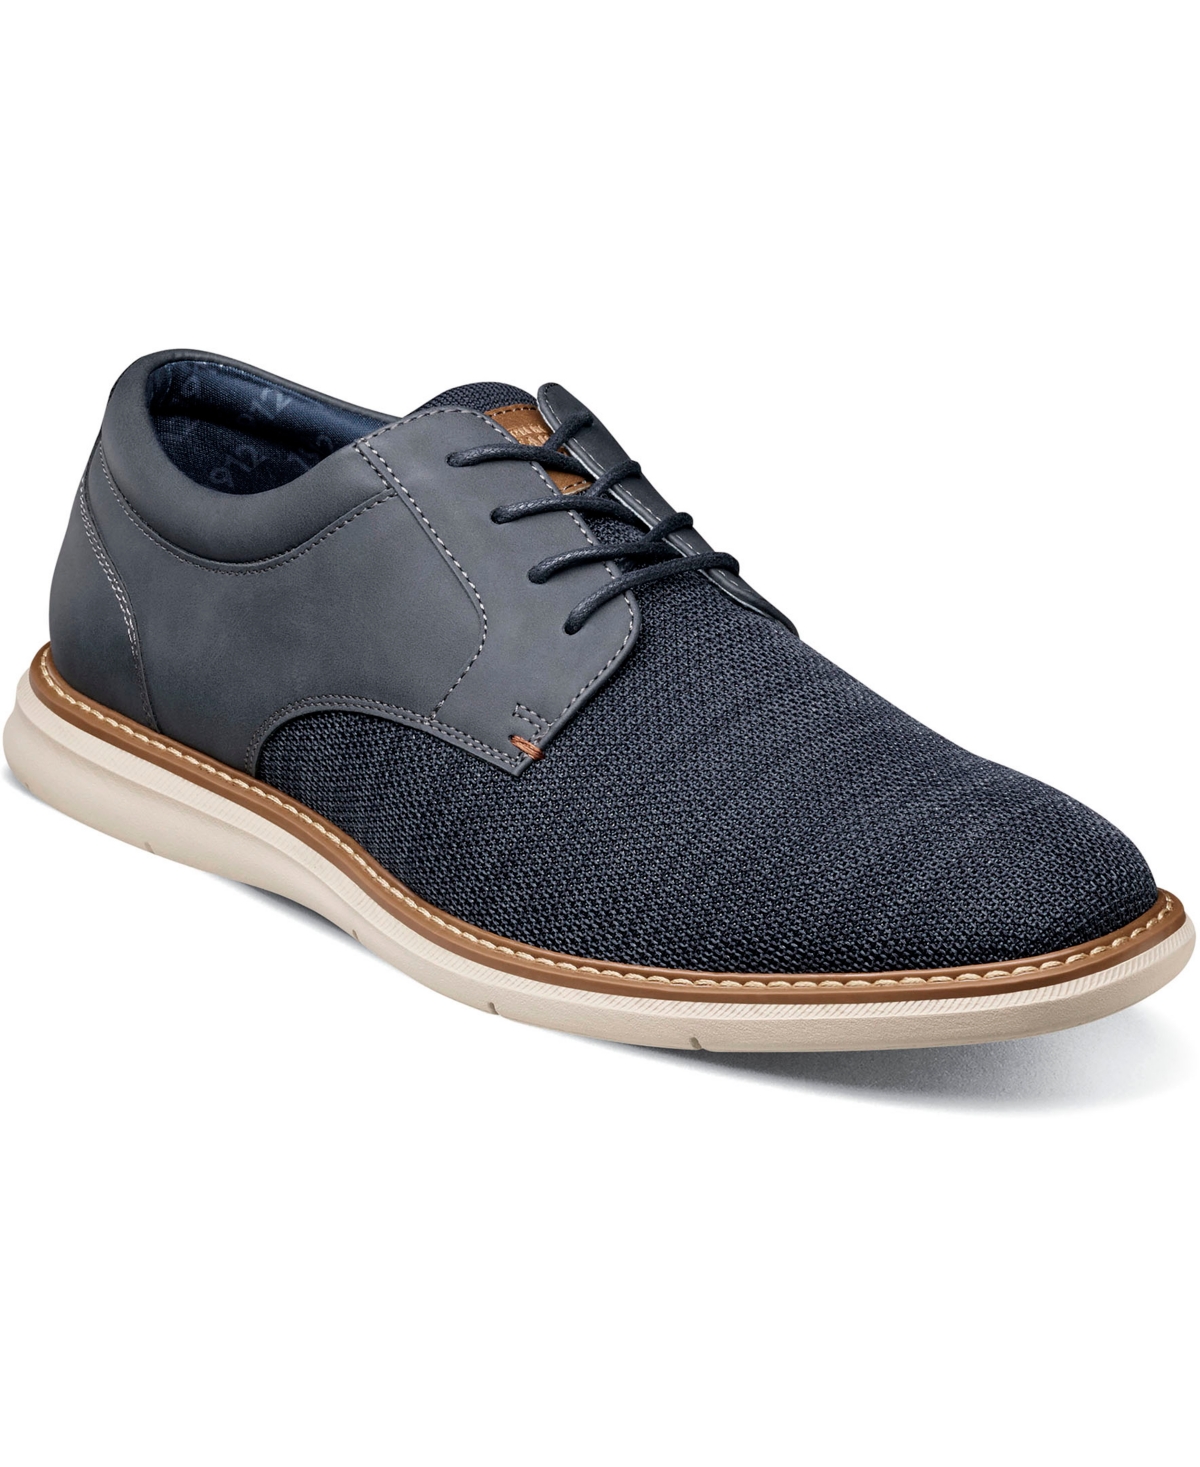 Men's Chase Knit Plain Toe Oxford Shoes - Navy Multi